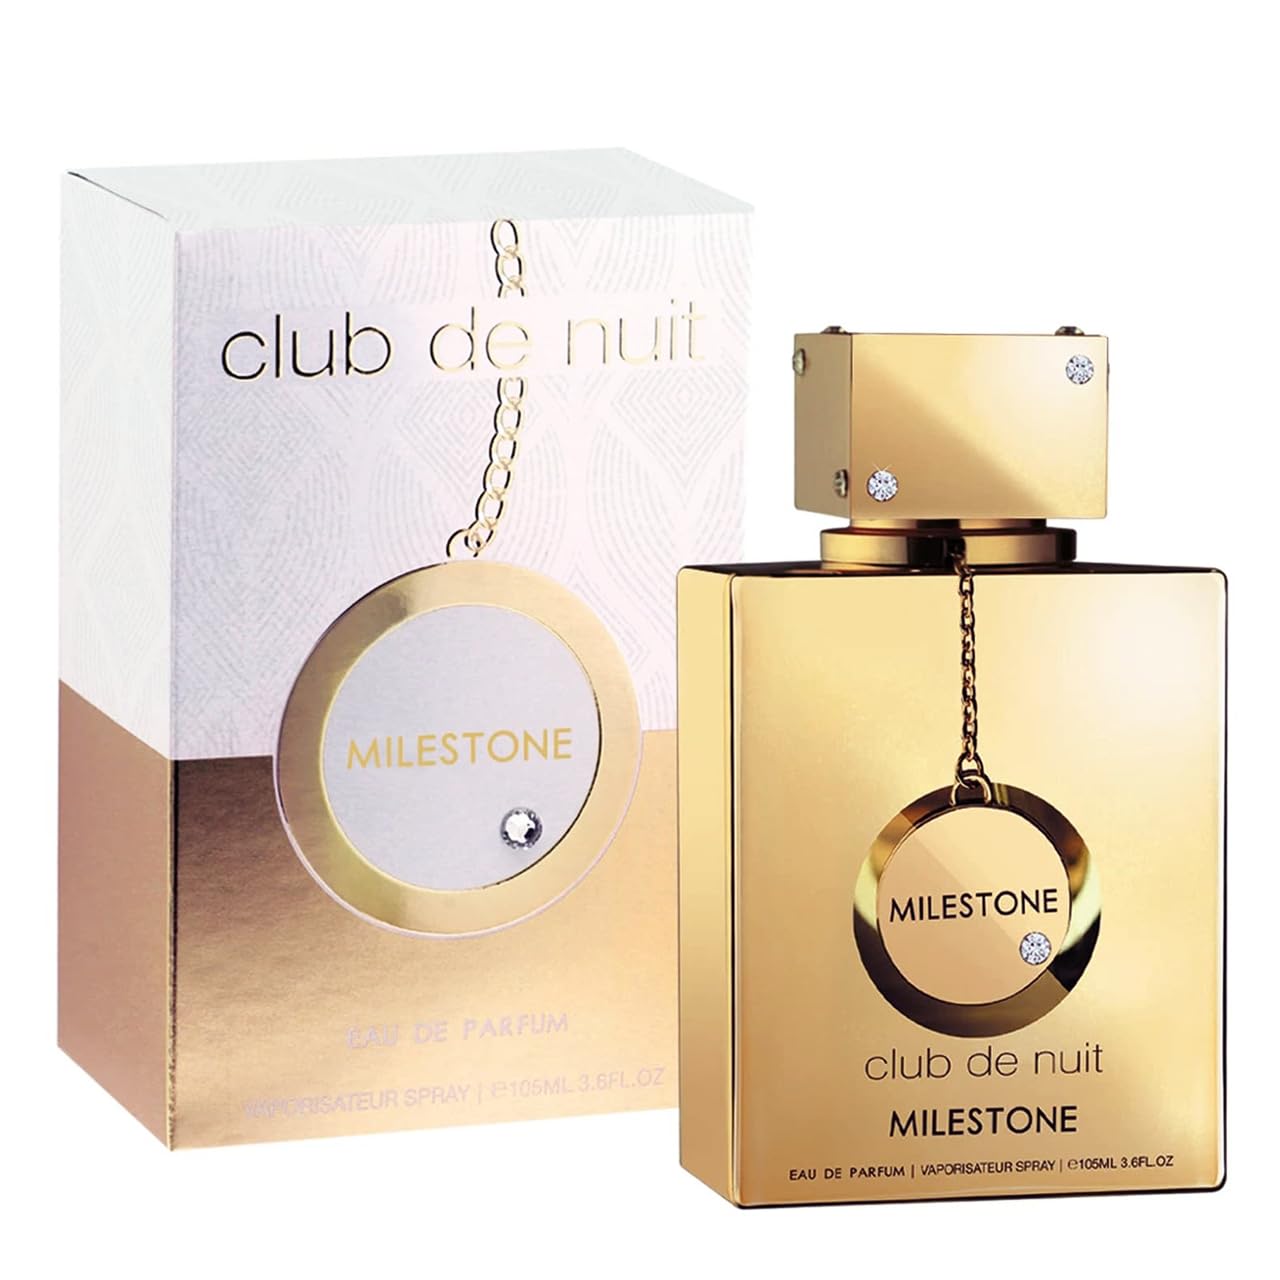 Armaf Club De Nuit Milestone – eau de parfum, 105ml